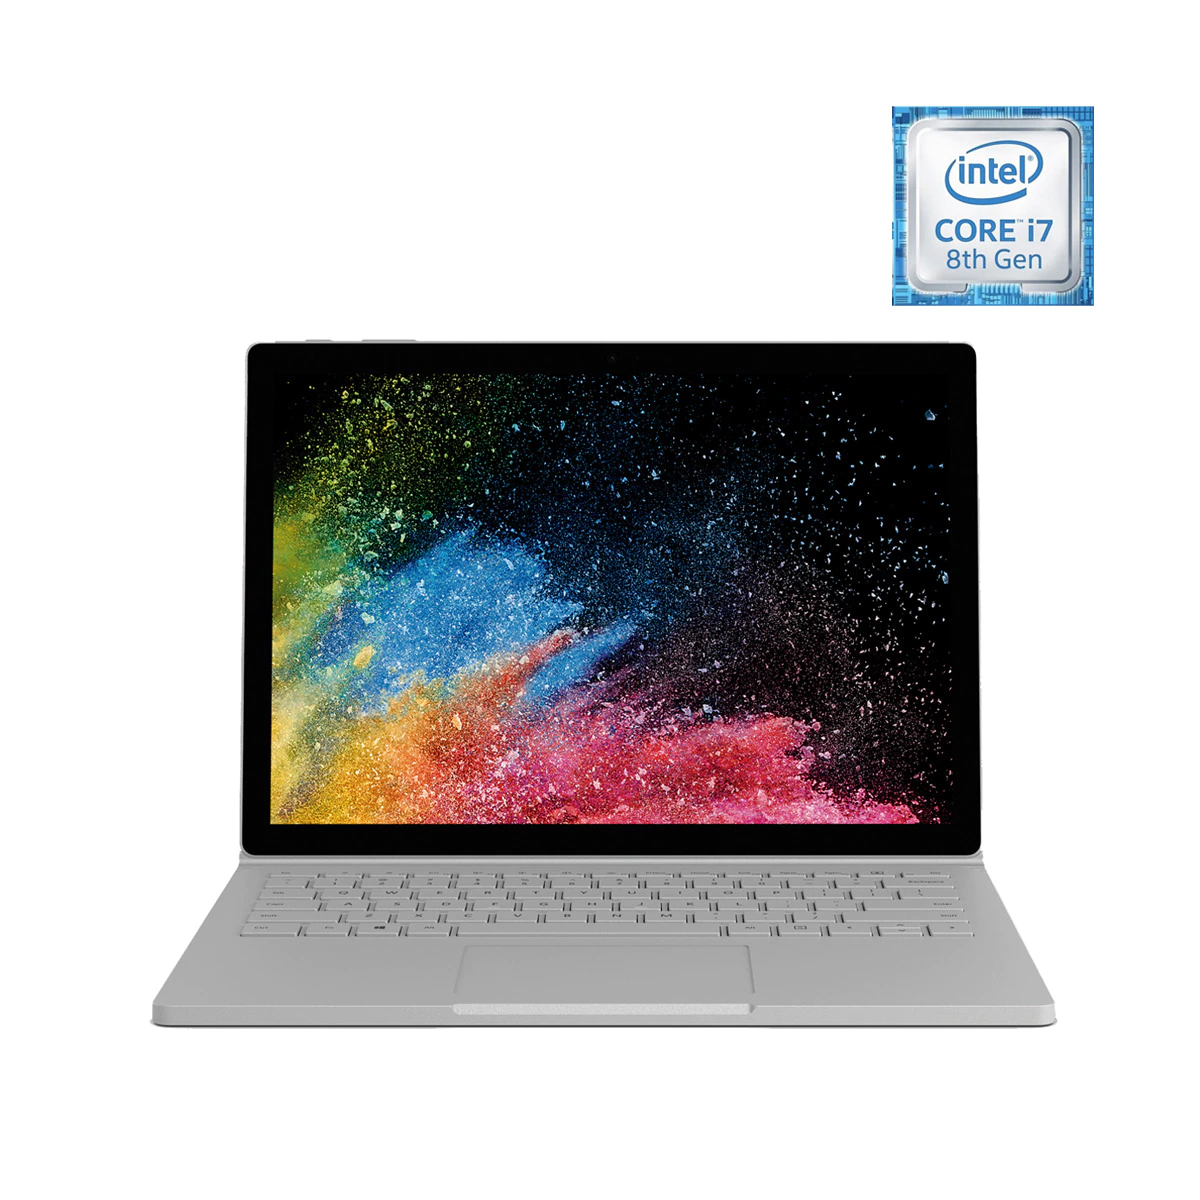 Microsoft Surface Book 2, i7, 16 GB, 256 GB SSD, GTX 1060 6 GB